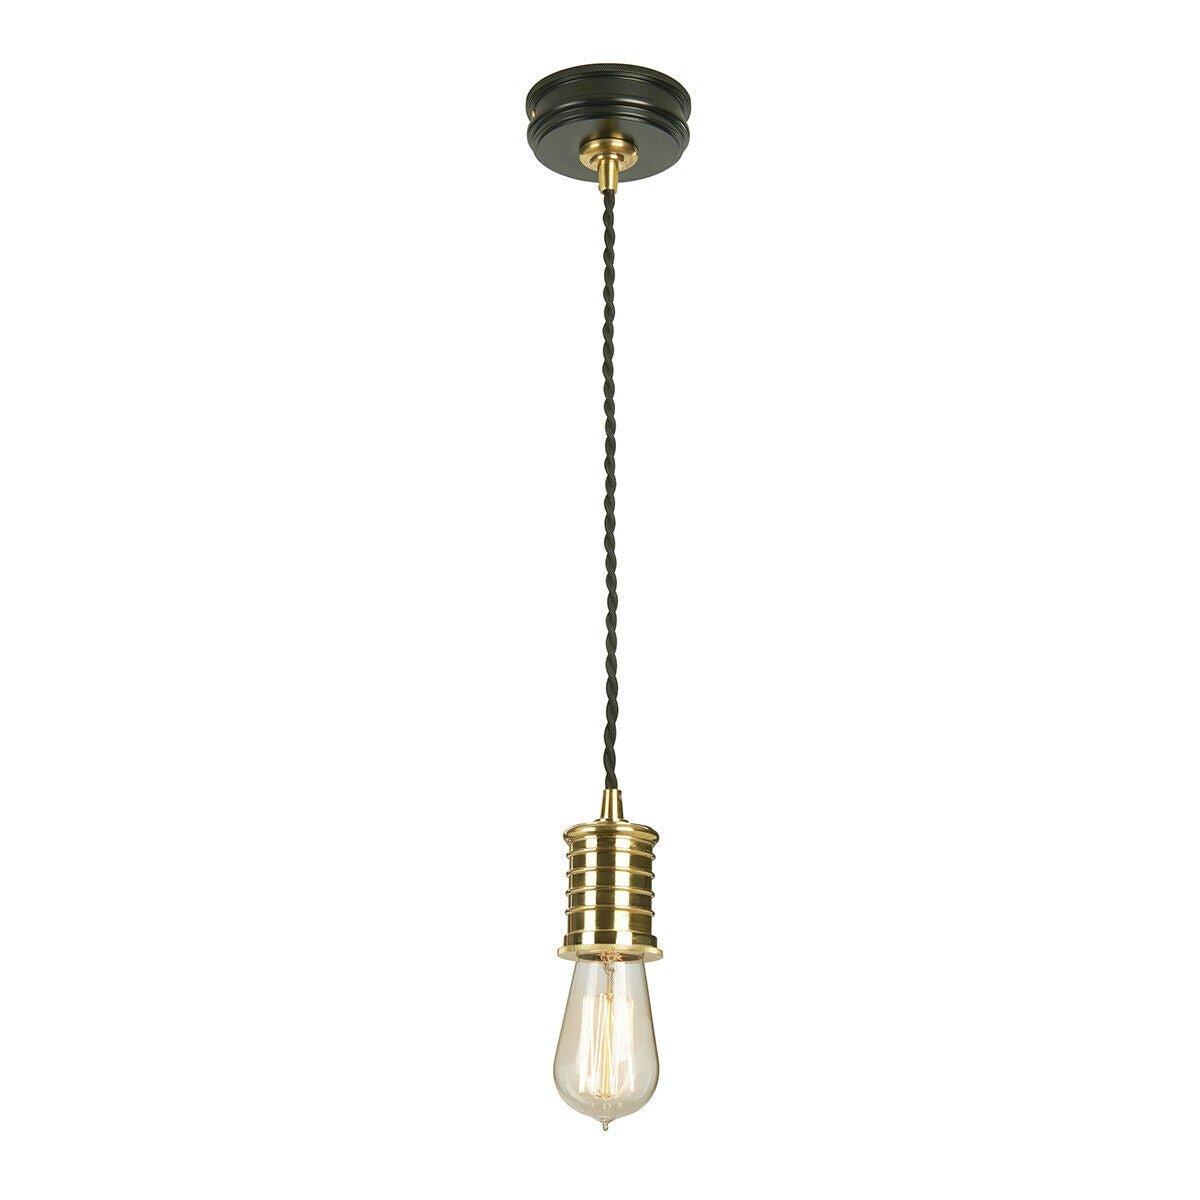 1 Bulb Ceiling Pendant Light Fitting Black Highly Polished Brass LED E27 60W